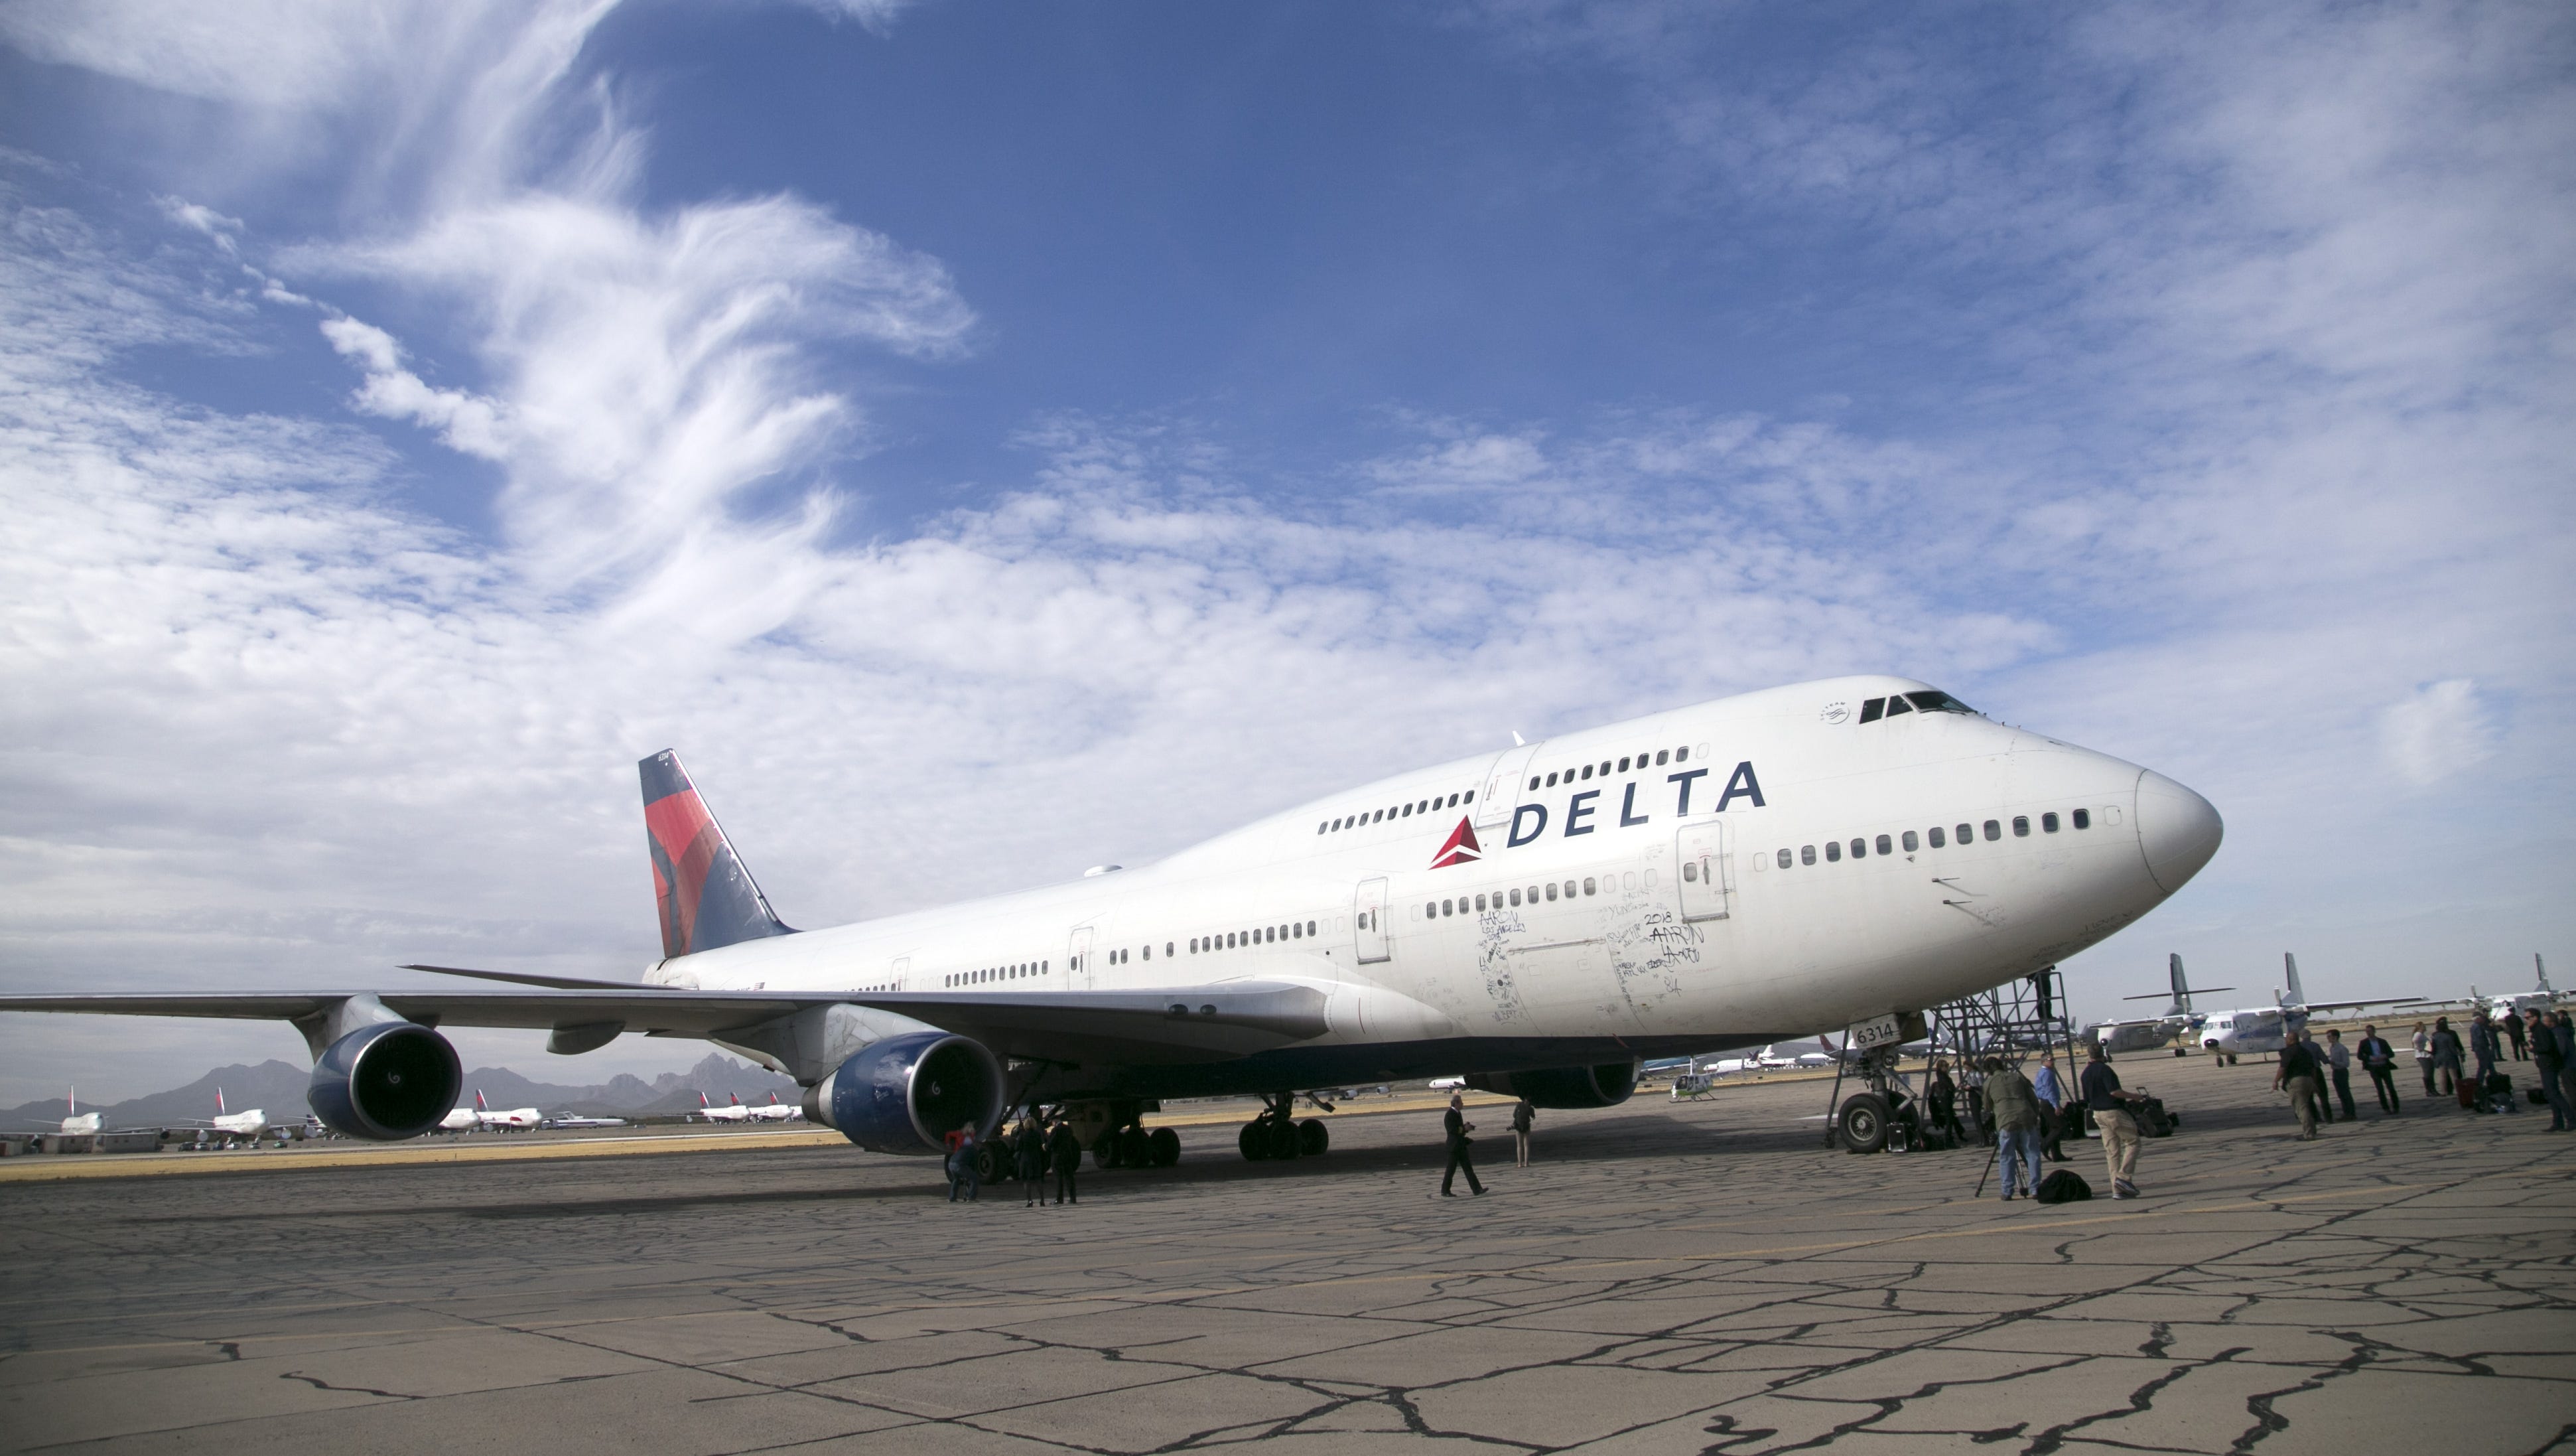 Stapel stapel oud Delta Airlines' last 747 is retired at Arizona airplane boneyard